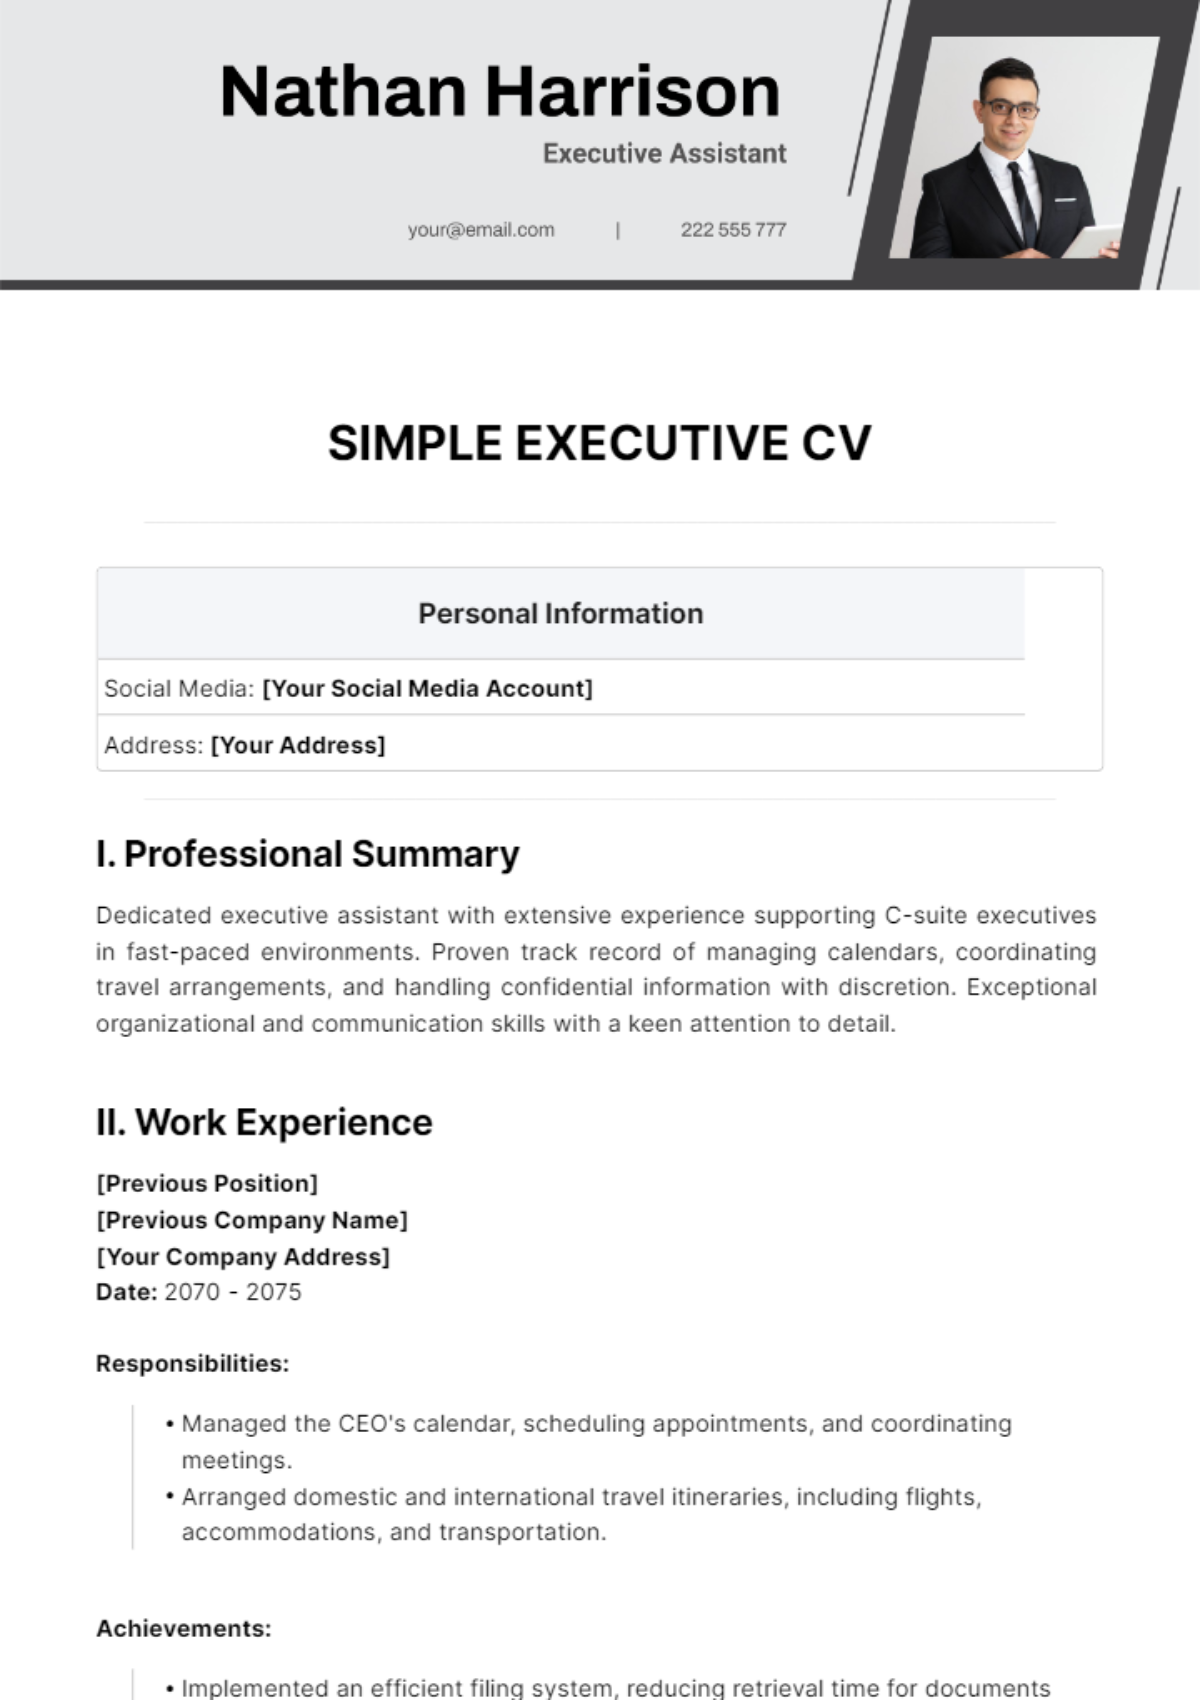 Simple Executive CV Template